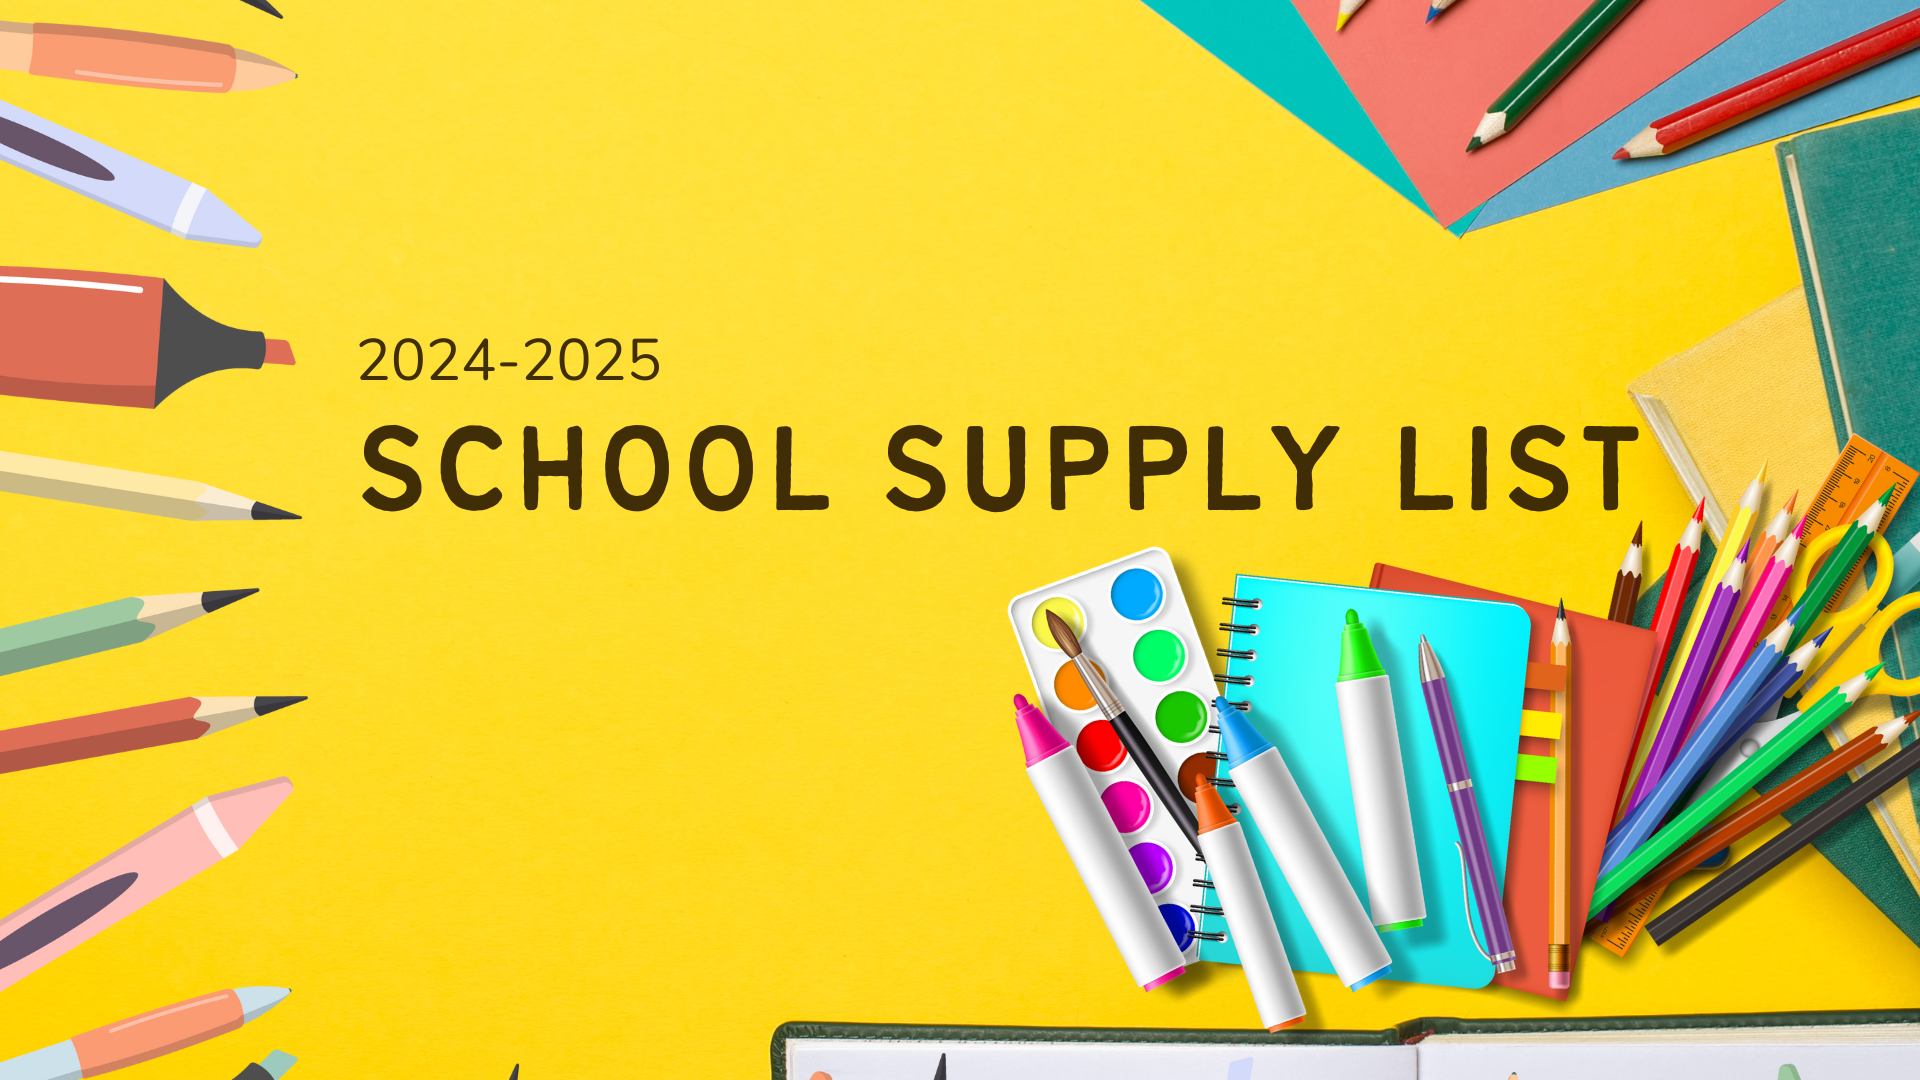 School Supply List Available